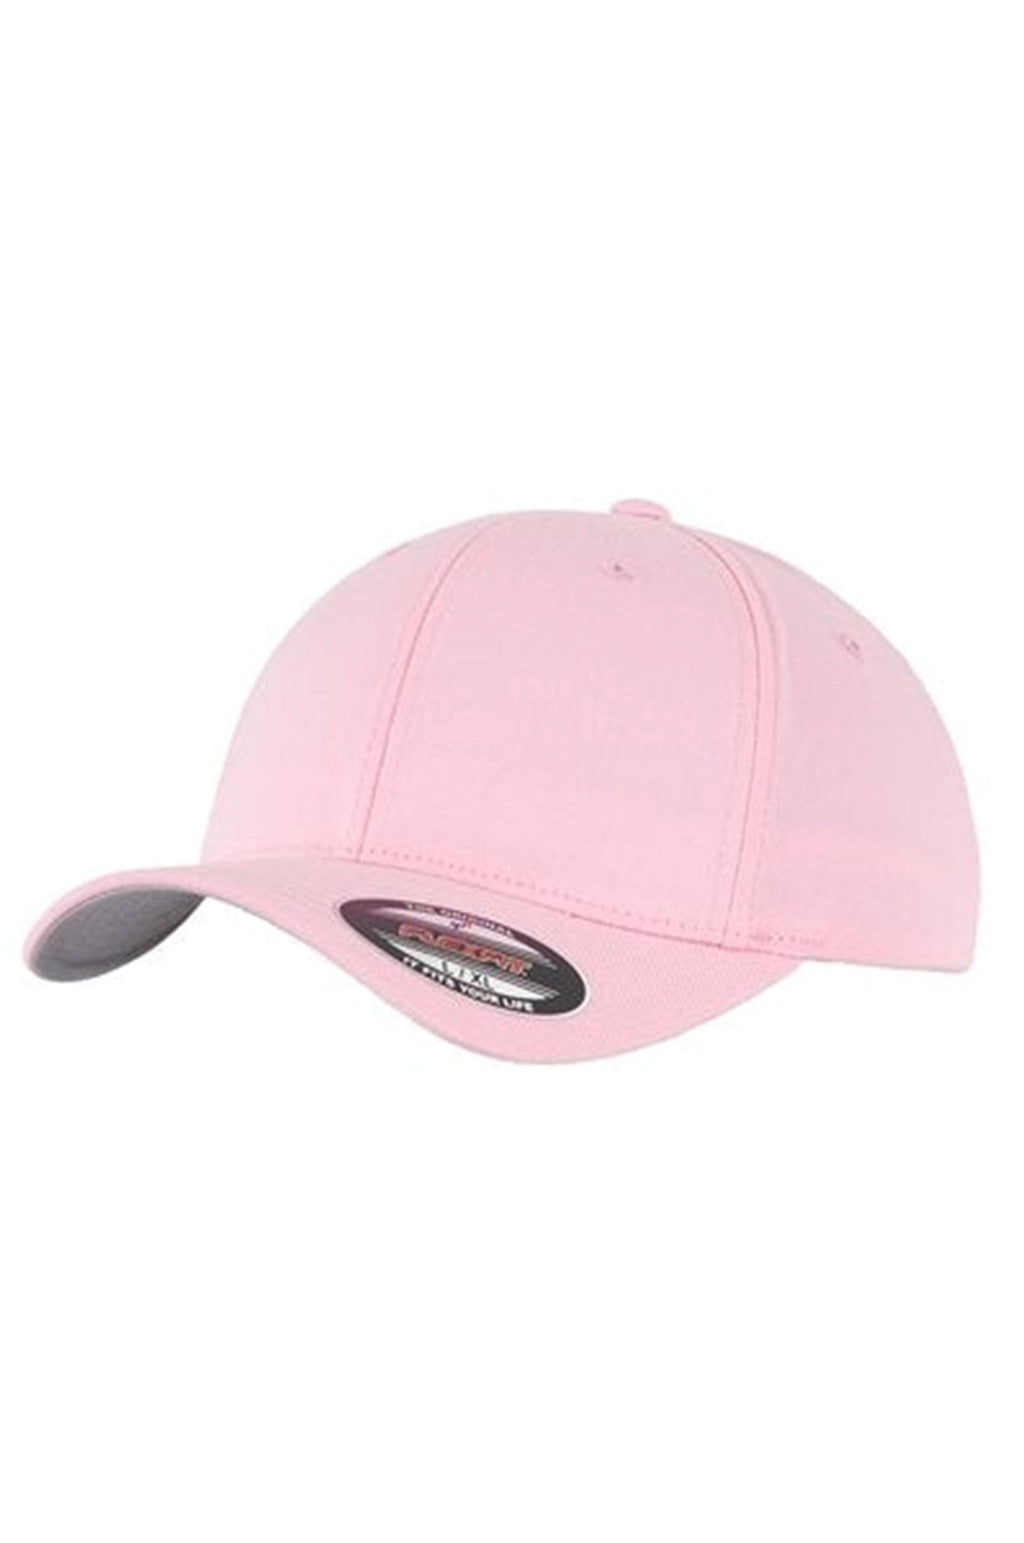 FlexFit原始棒球帽 - 粉红色